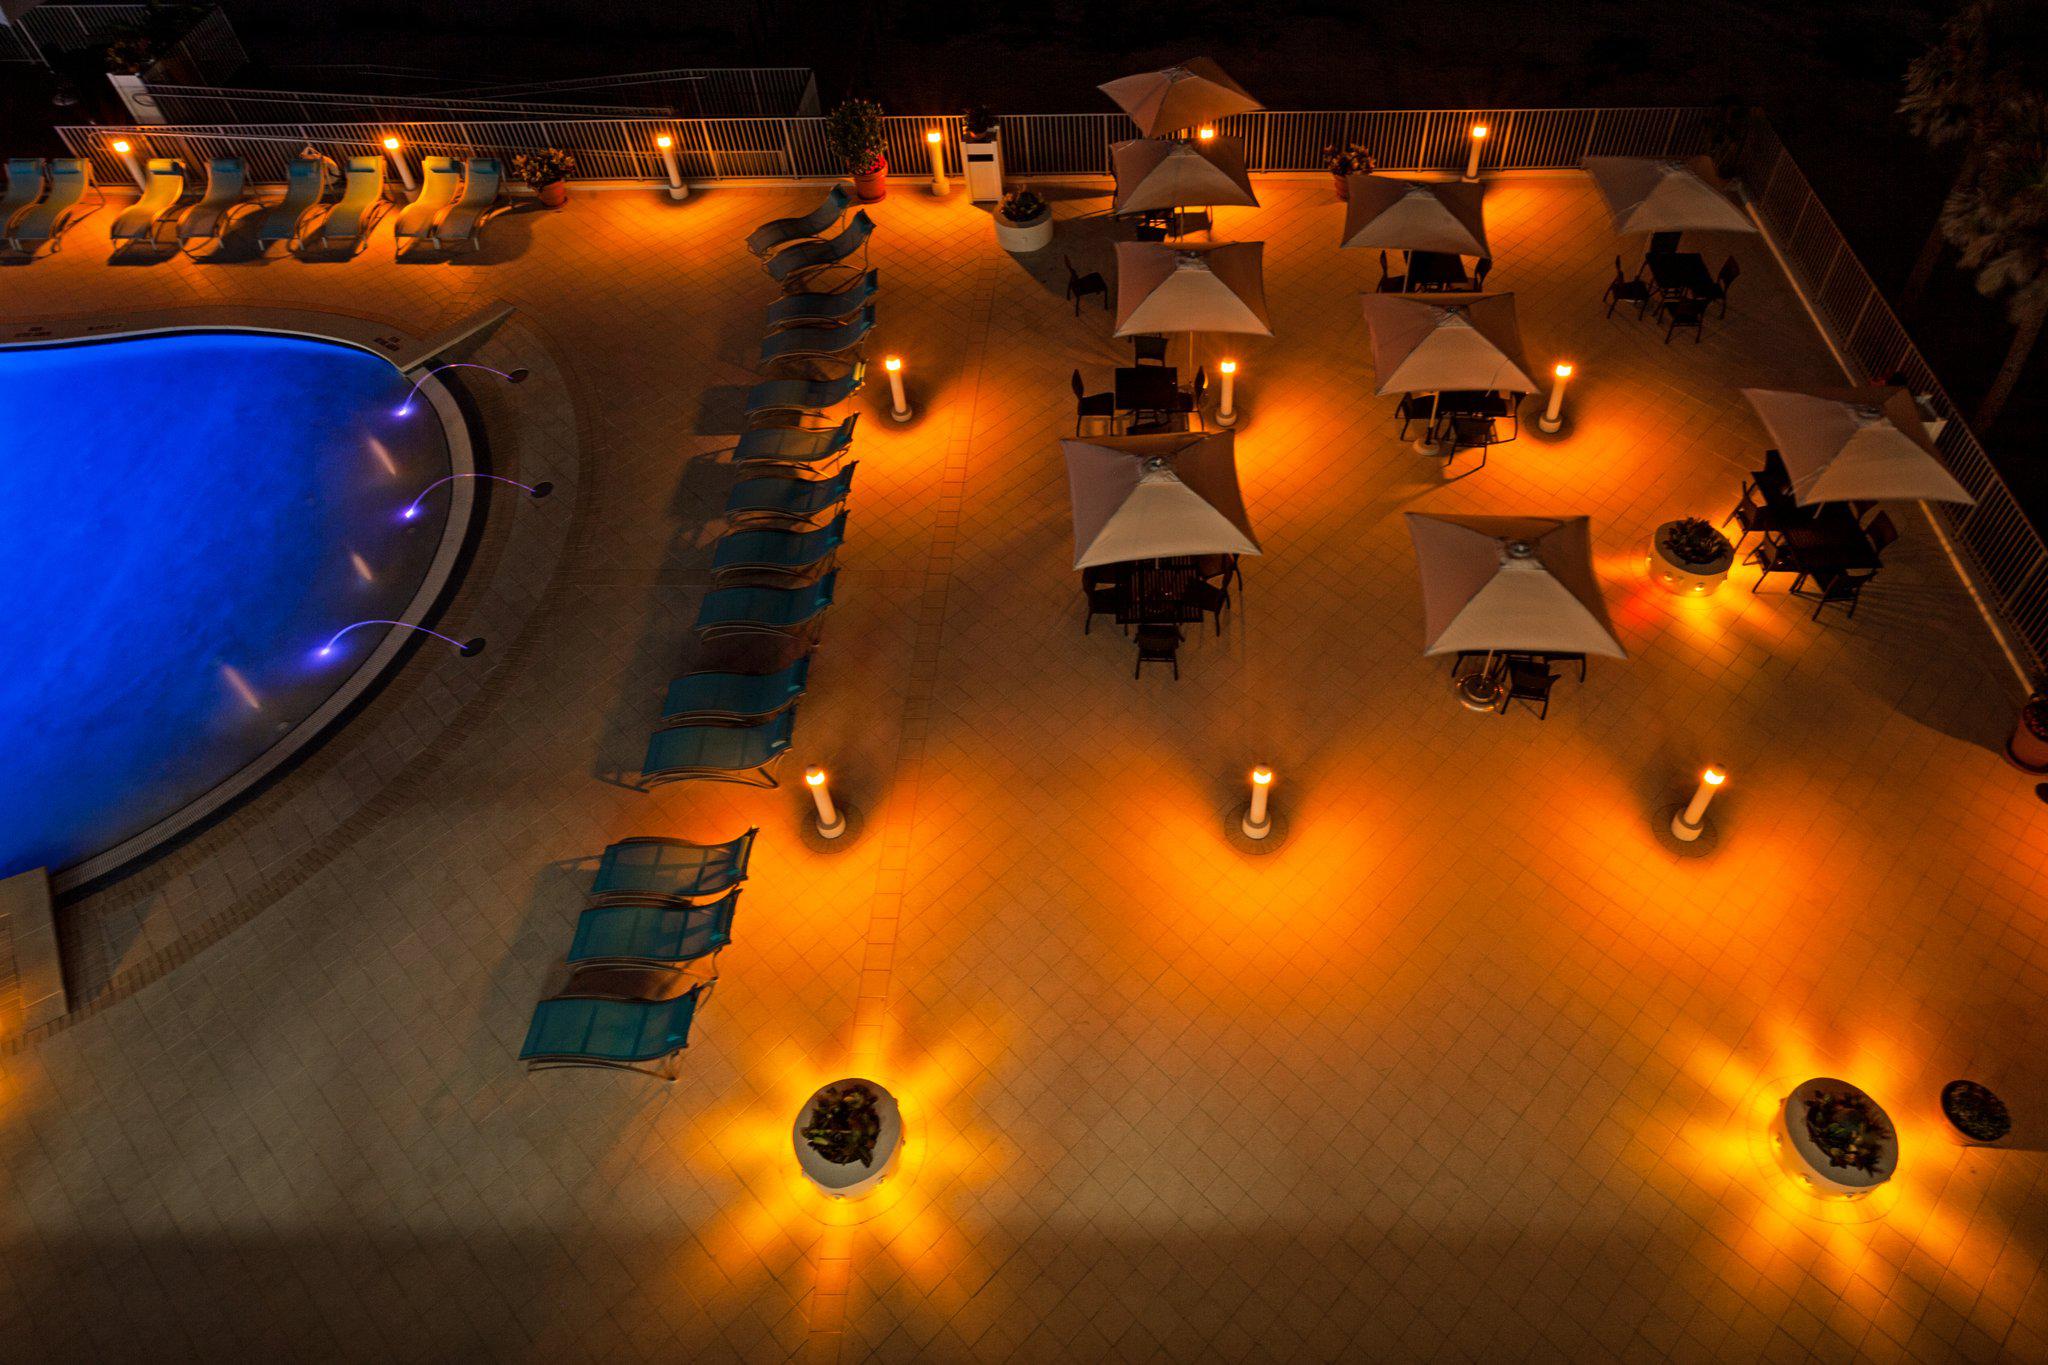 Holiday Inn Express & Suites Panama City Beach - Beachfront Photo